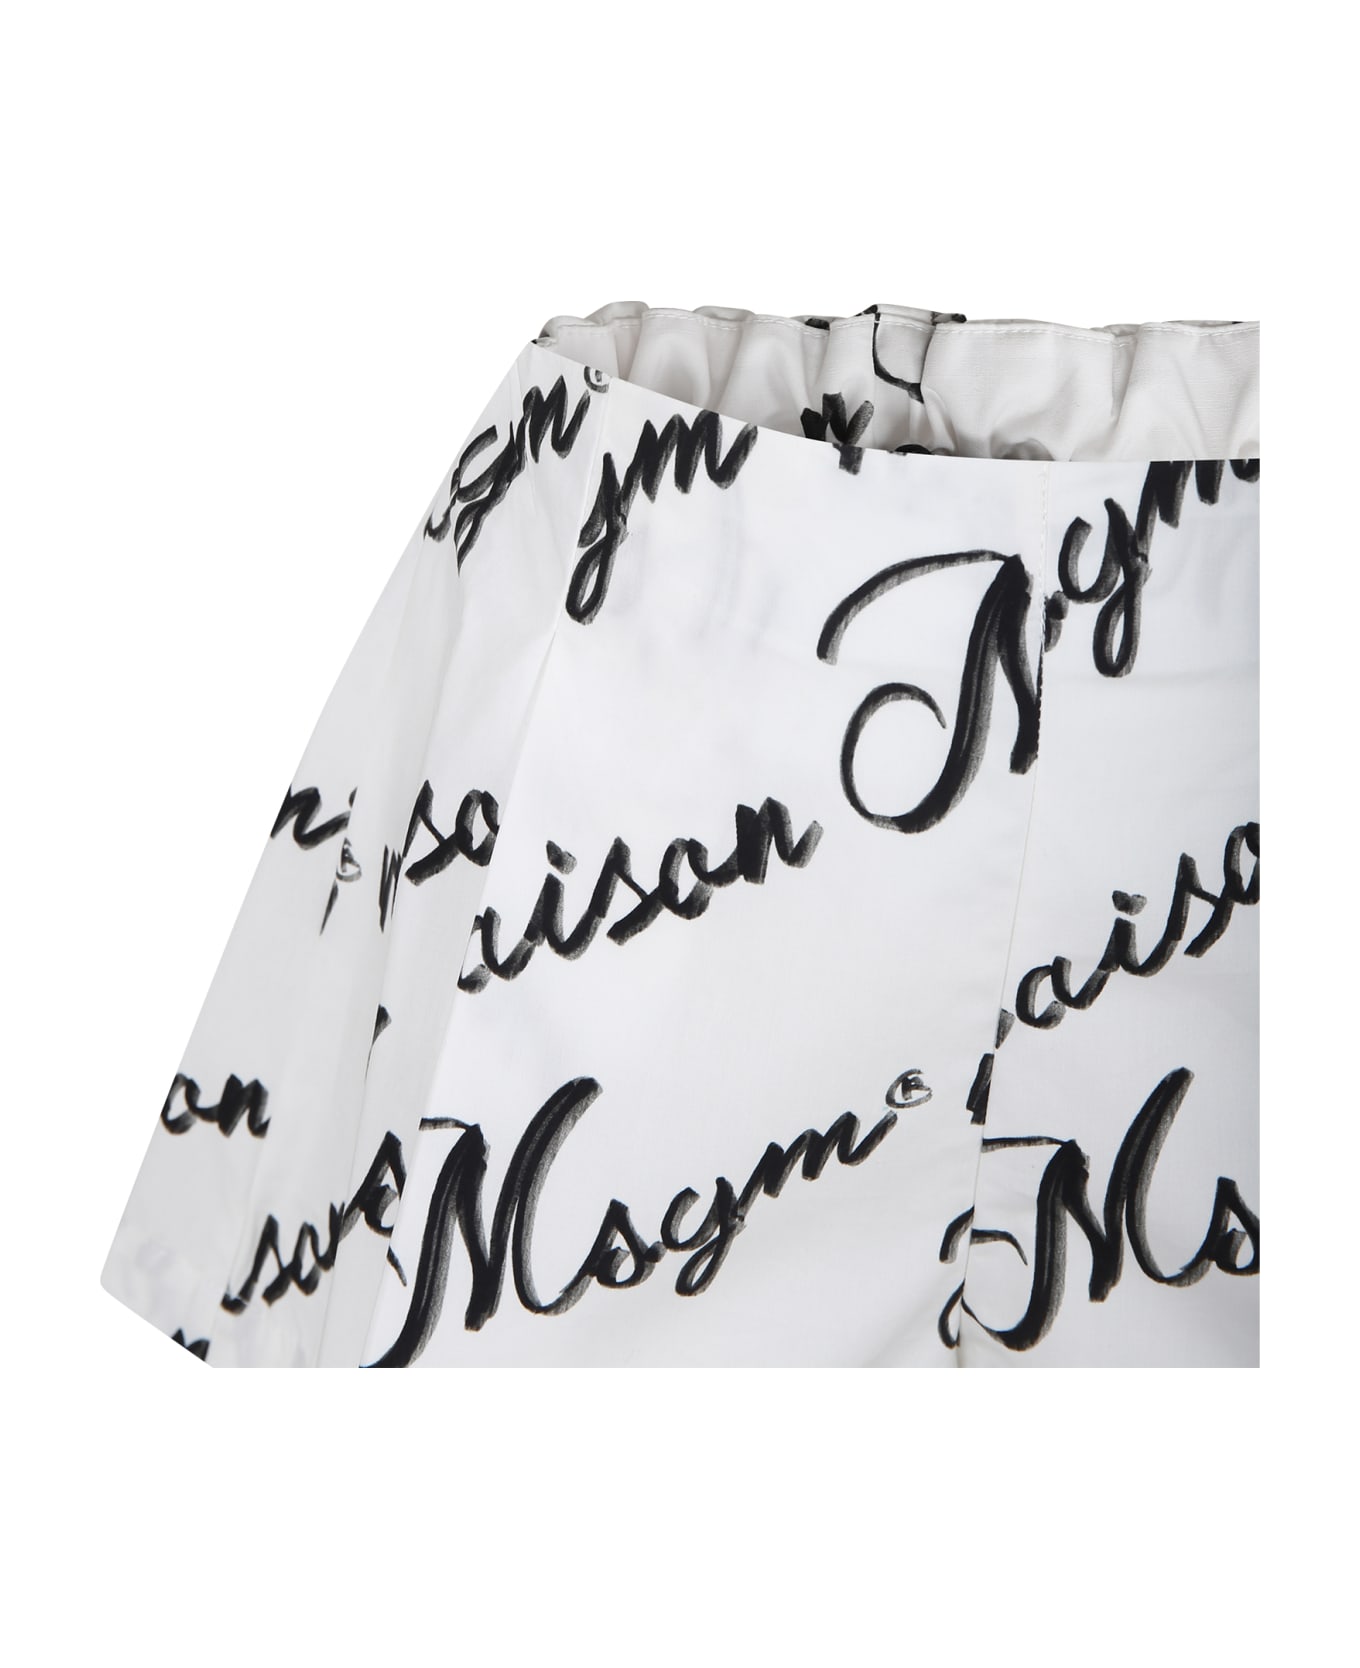 MSGM White Shorts For Girl With Logo - White